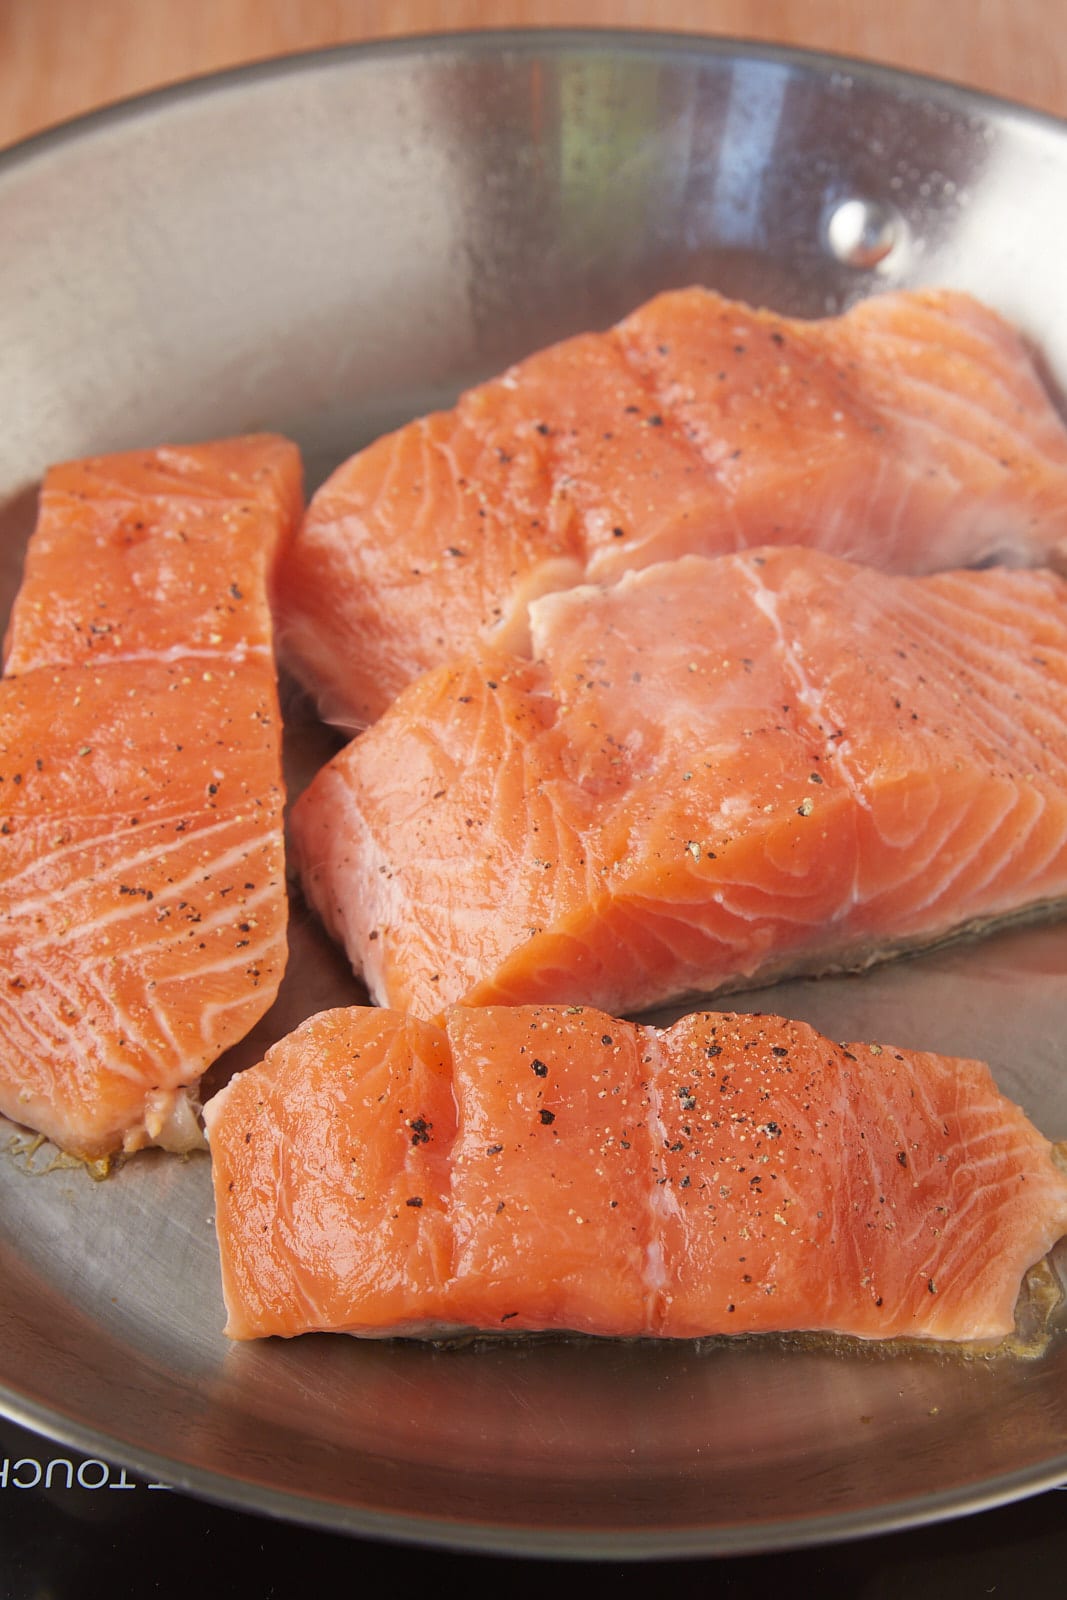 Raw salmon skin side down in a pan.